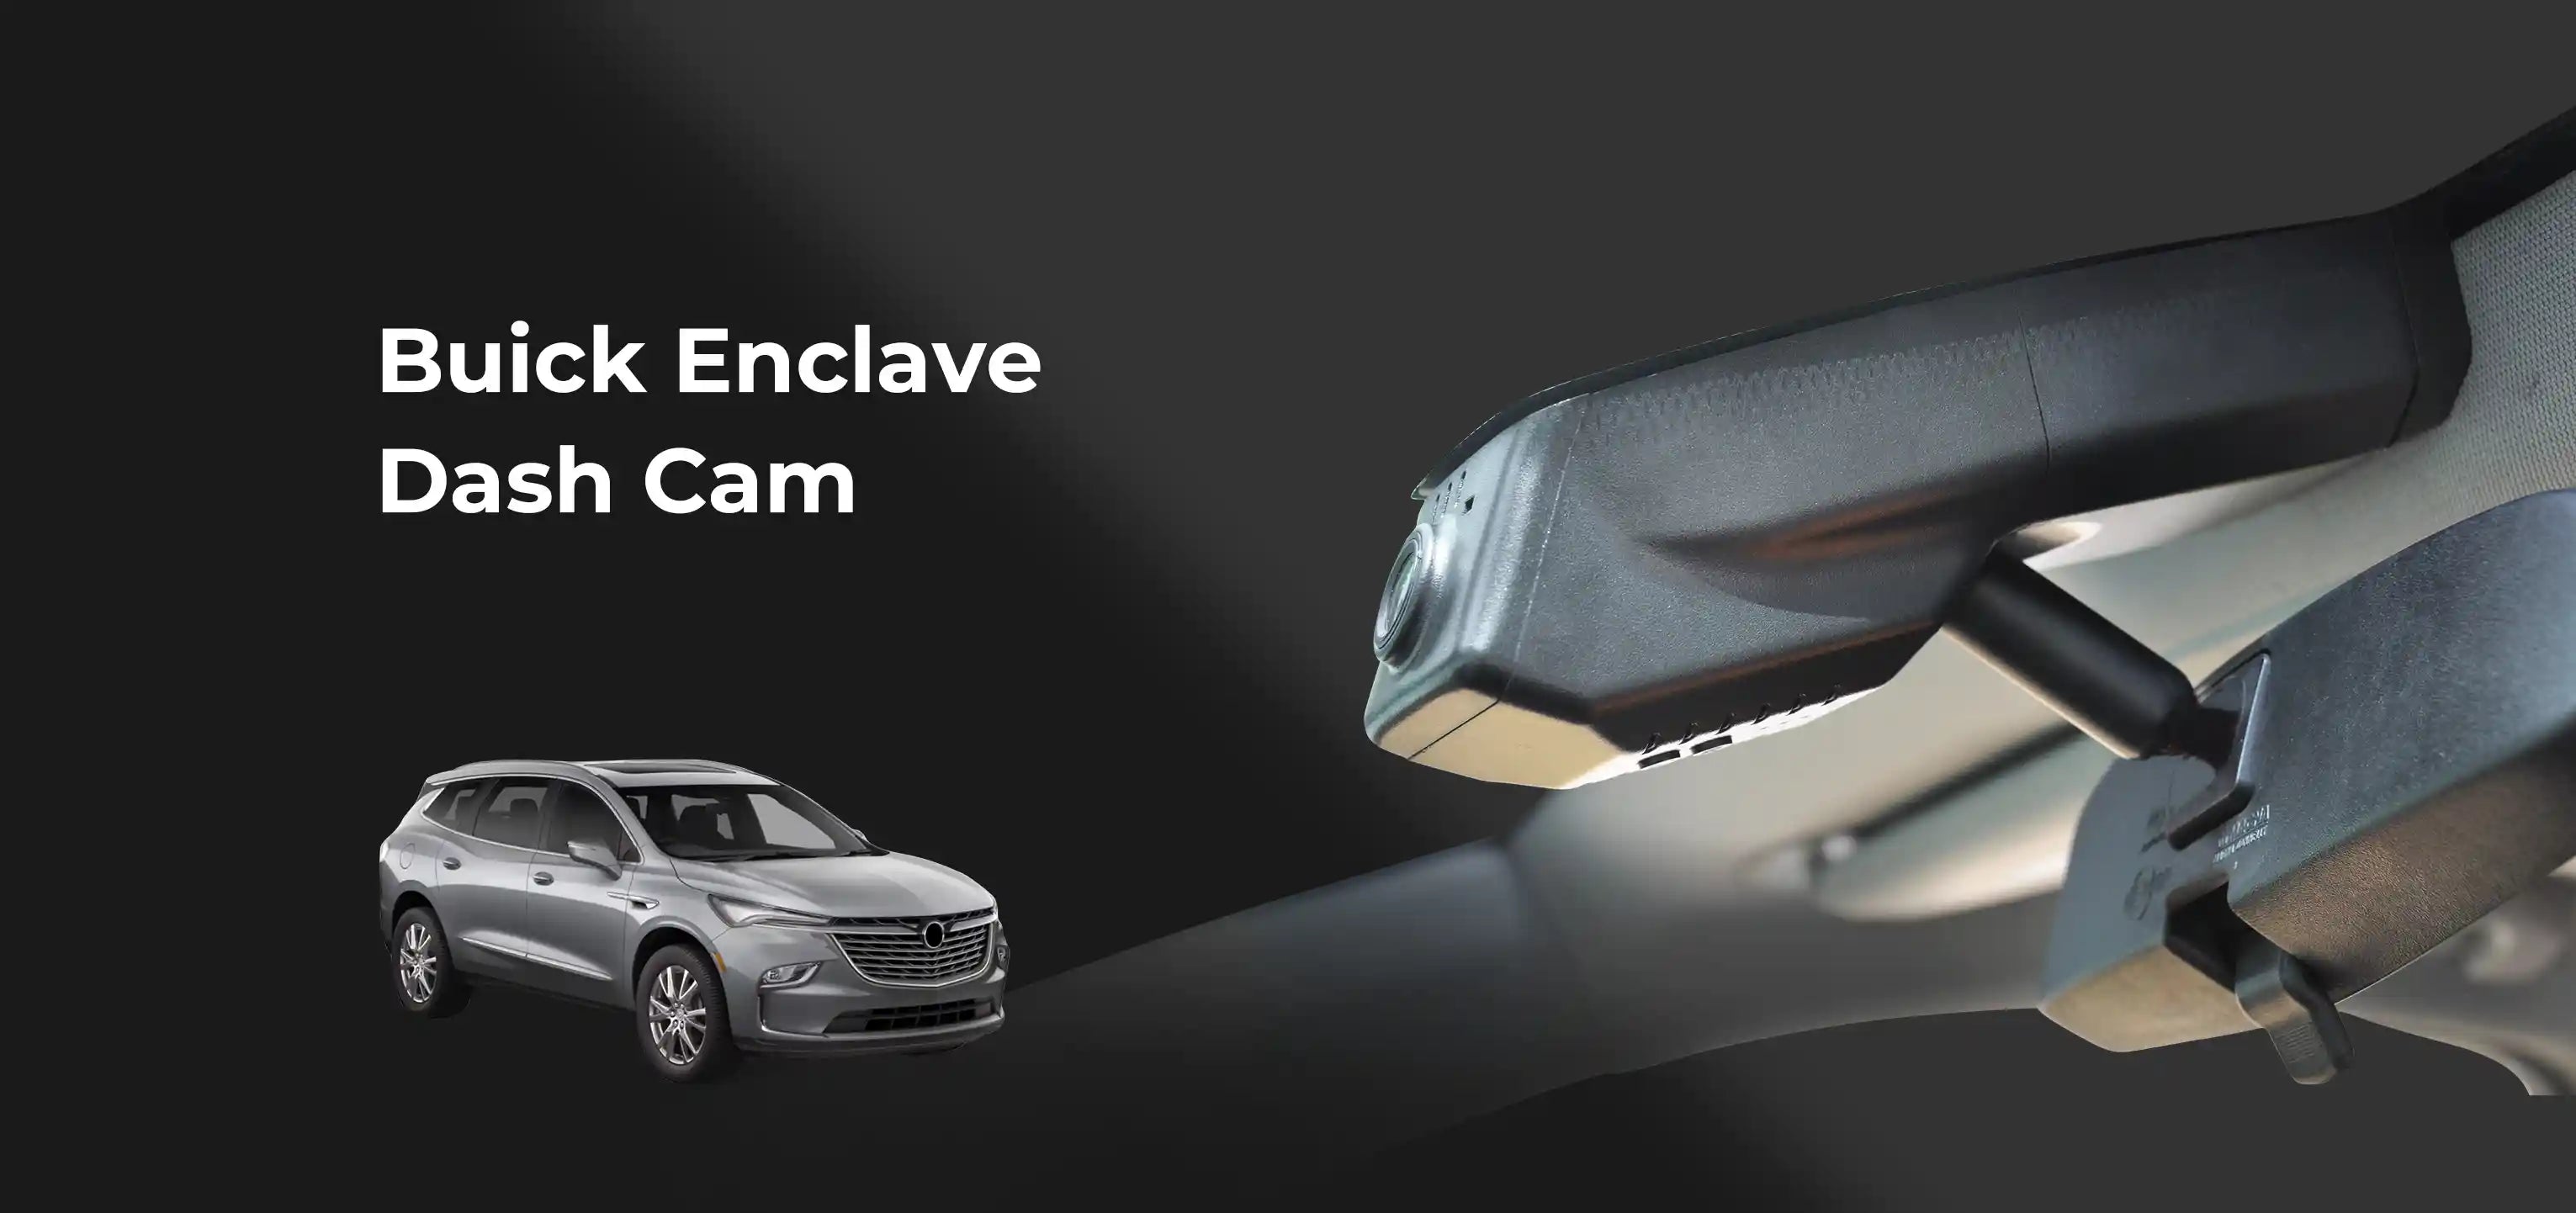 Buick Enclave dash camera banner 